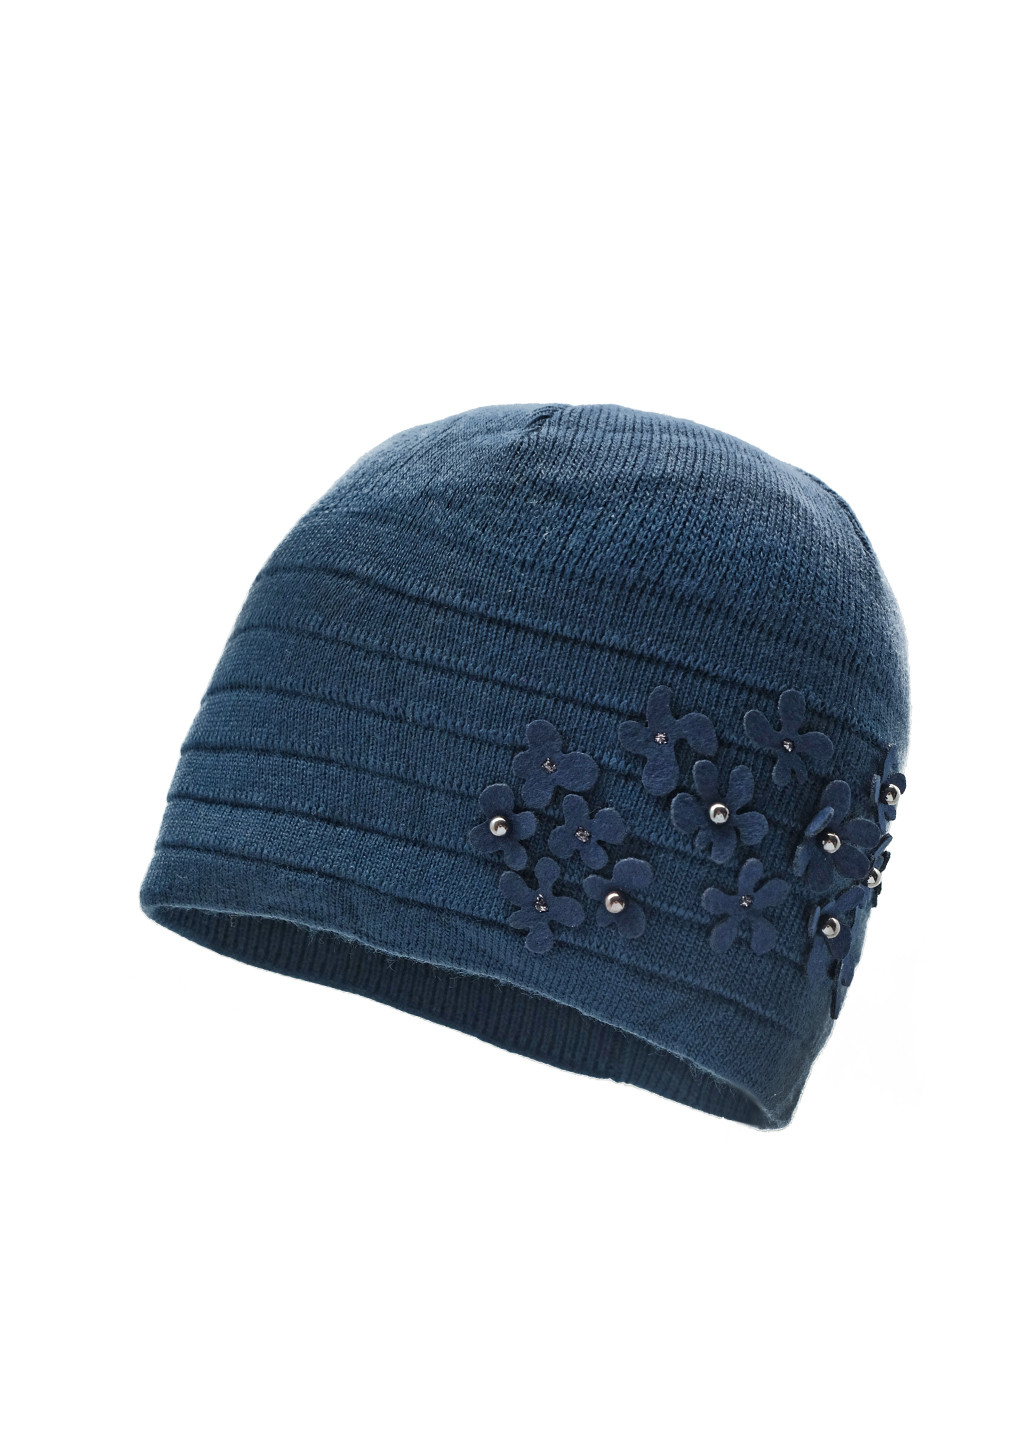 Синий демисезонный комплект (шапка, шарф) Pawonex